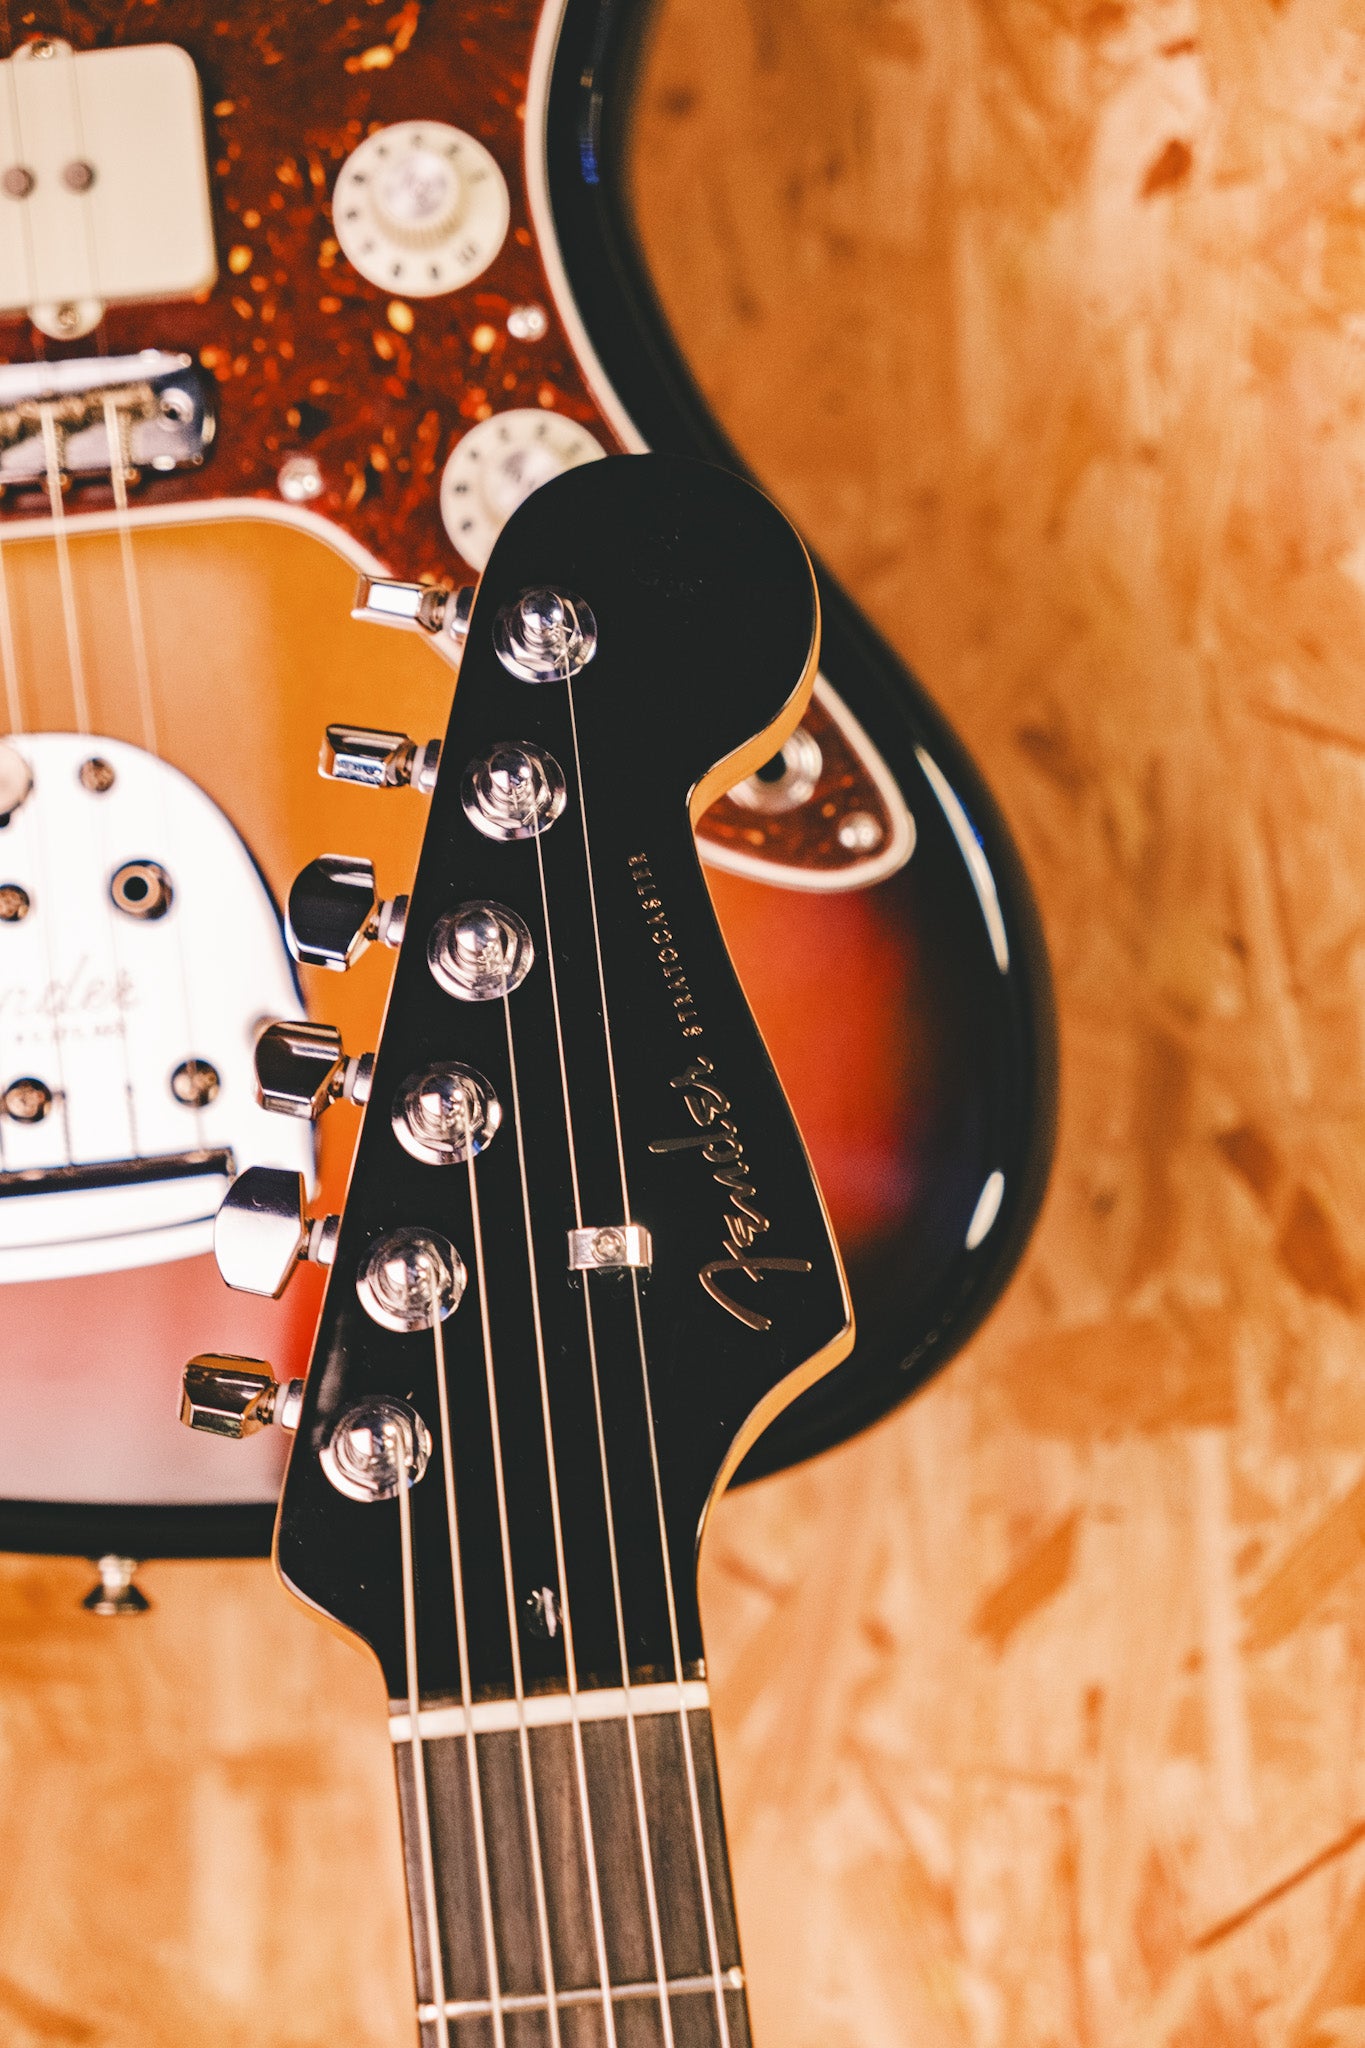 Fender Limited Edition American Ultra Stratocaster, Tiger's Eye, Ebony Fingerboard